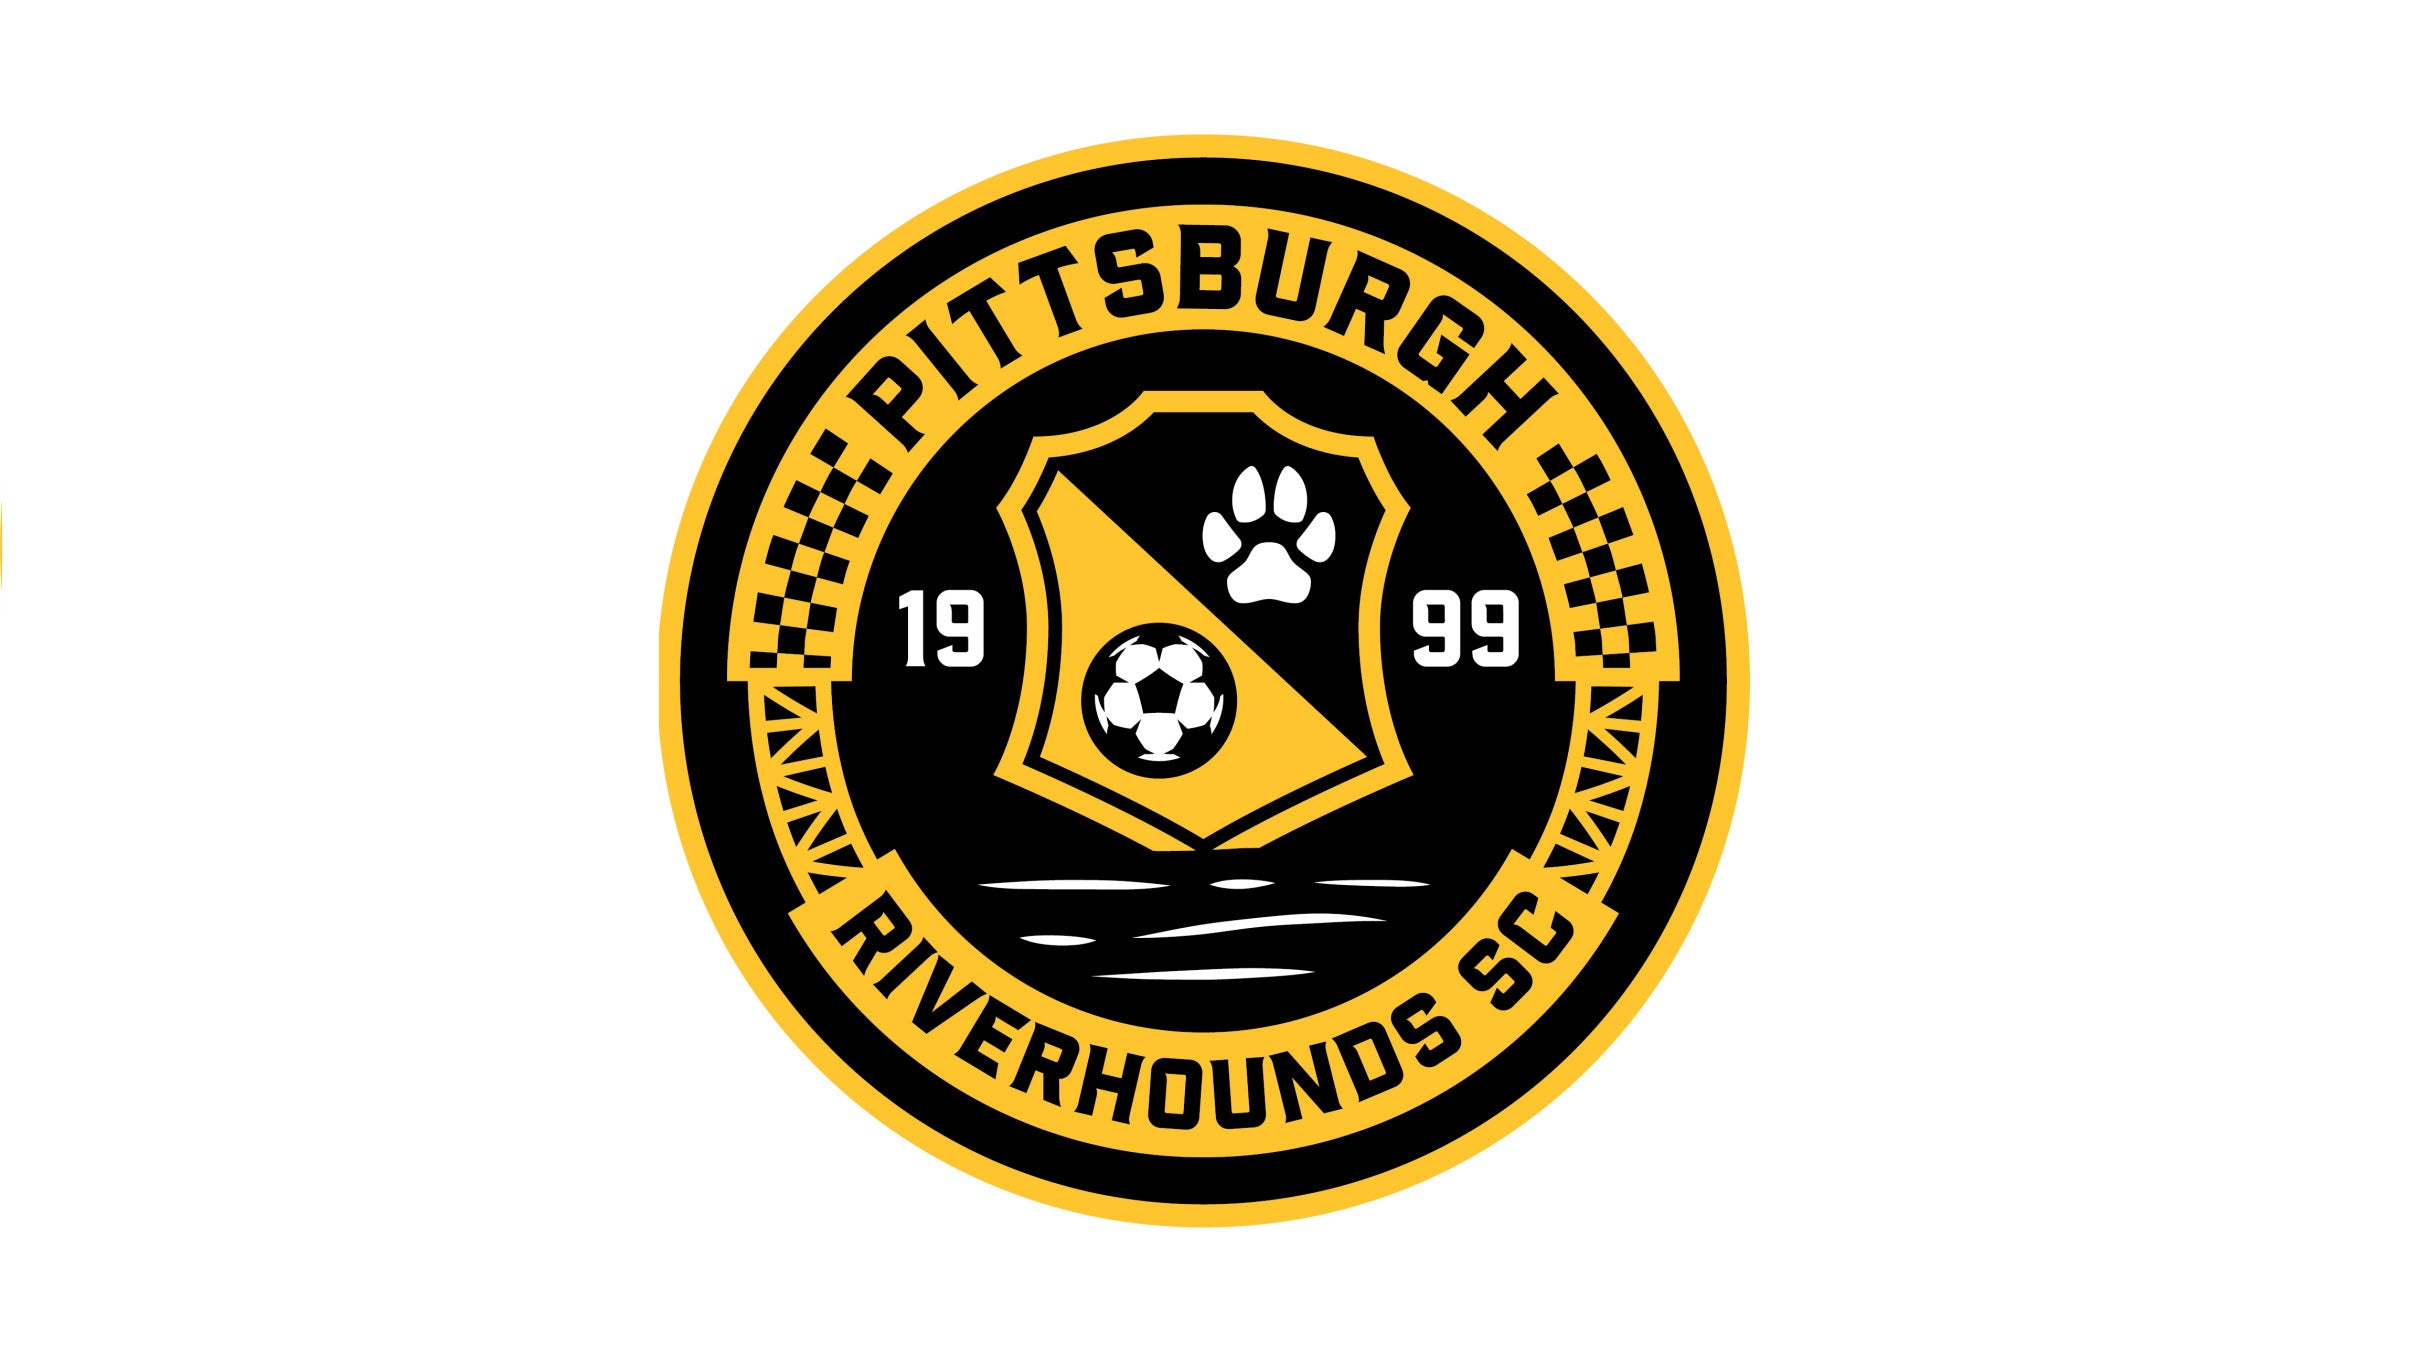 Pittsburgh Riverhounds SC vs. North Carolina FC